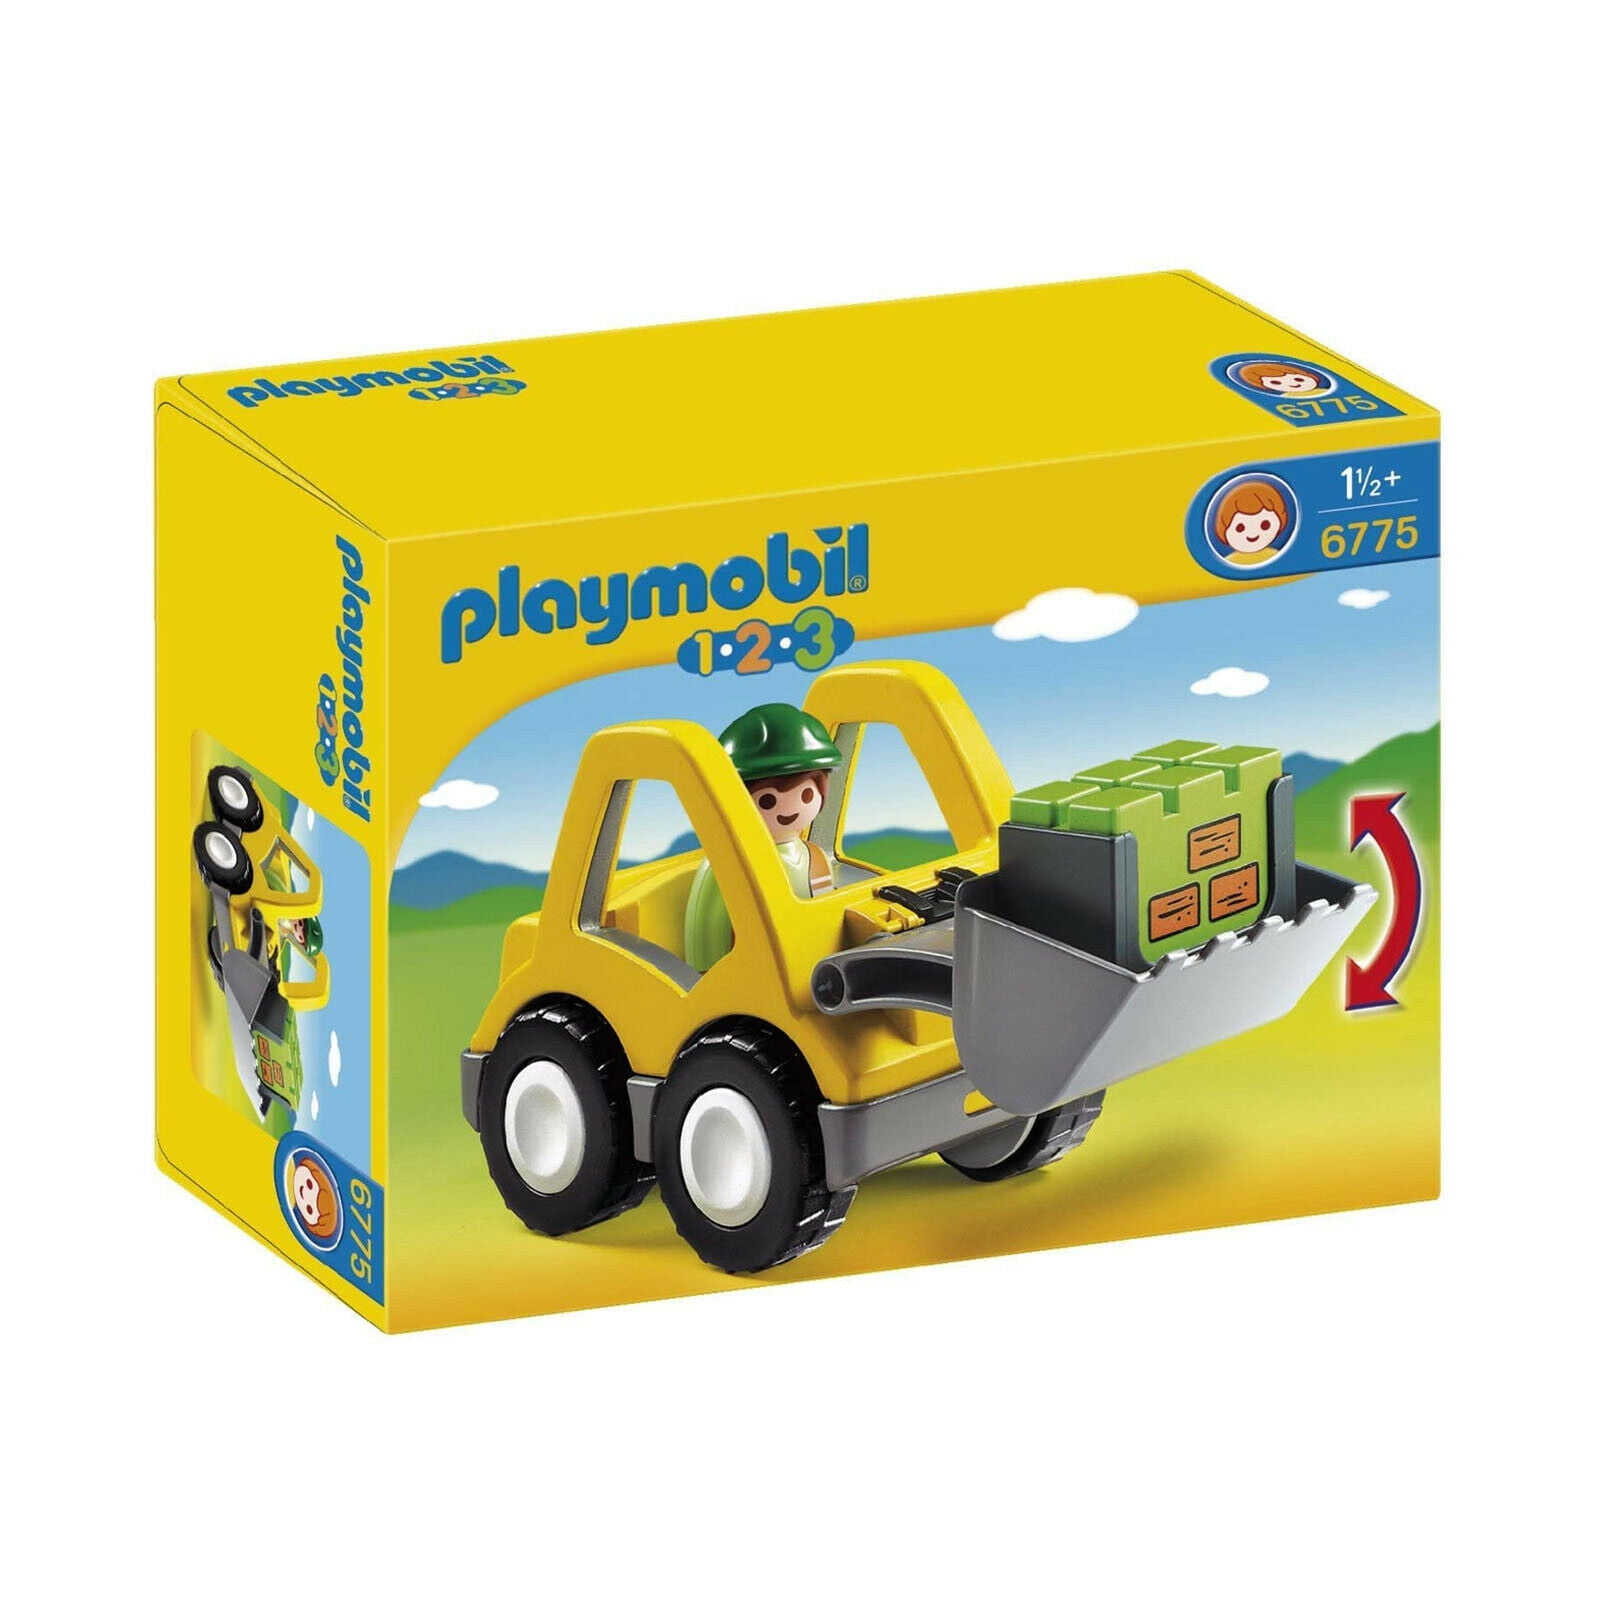 playmobil age range